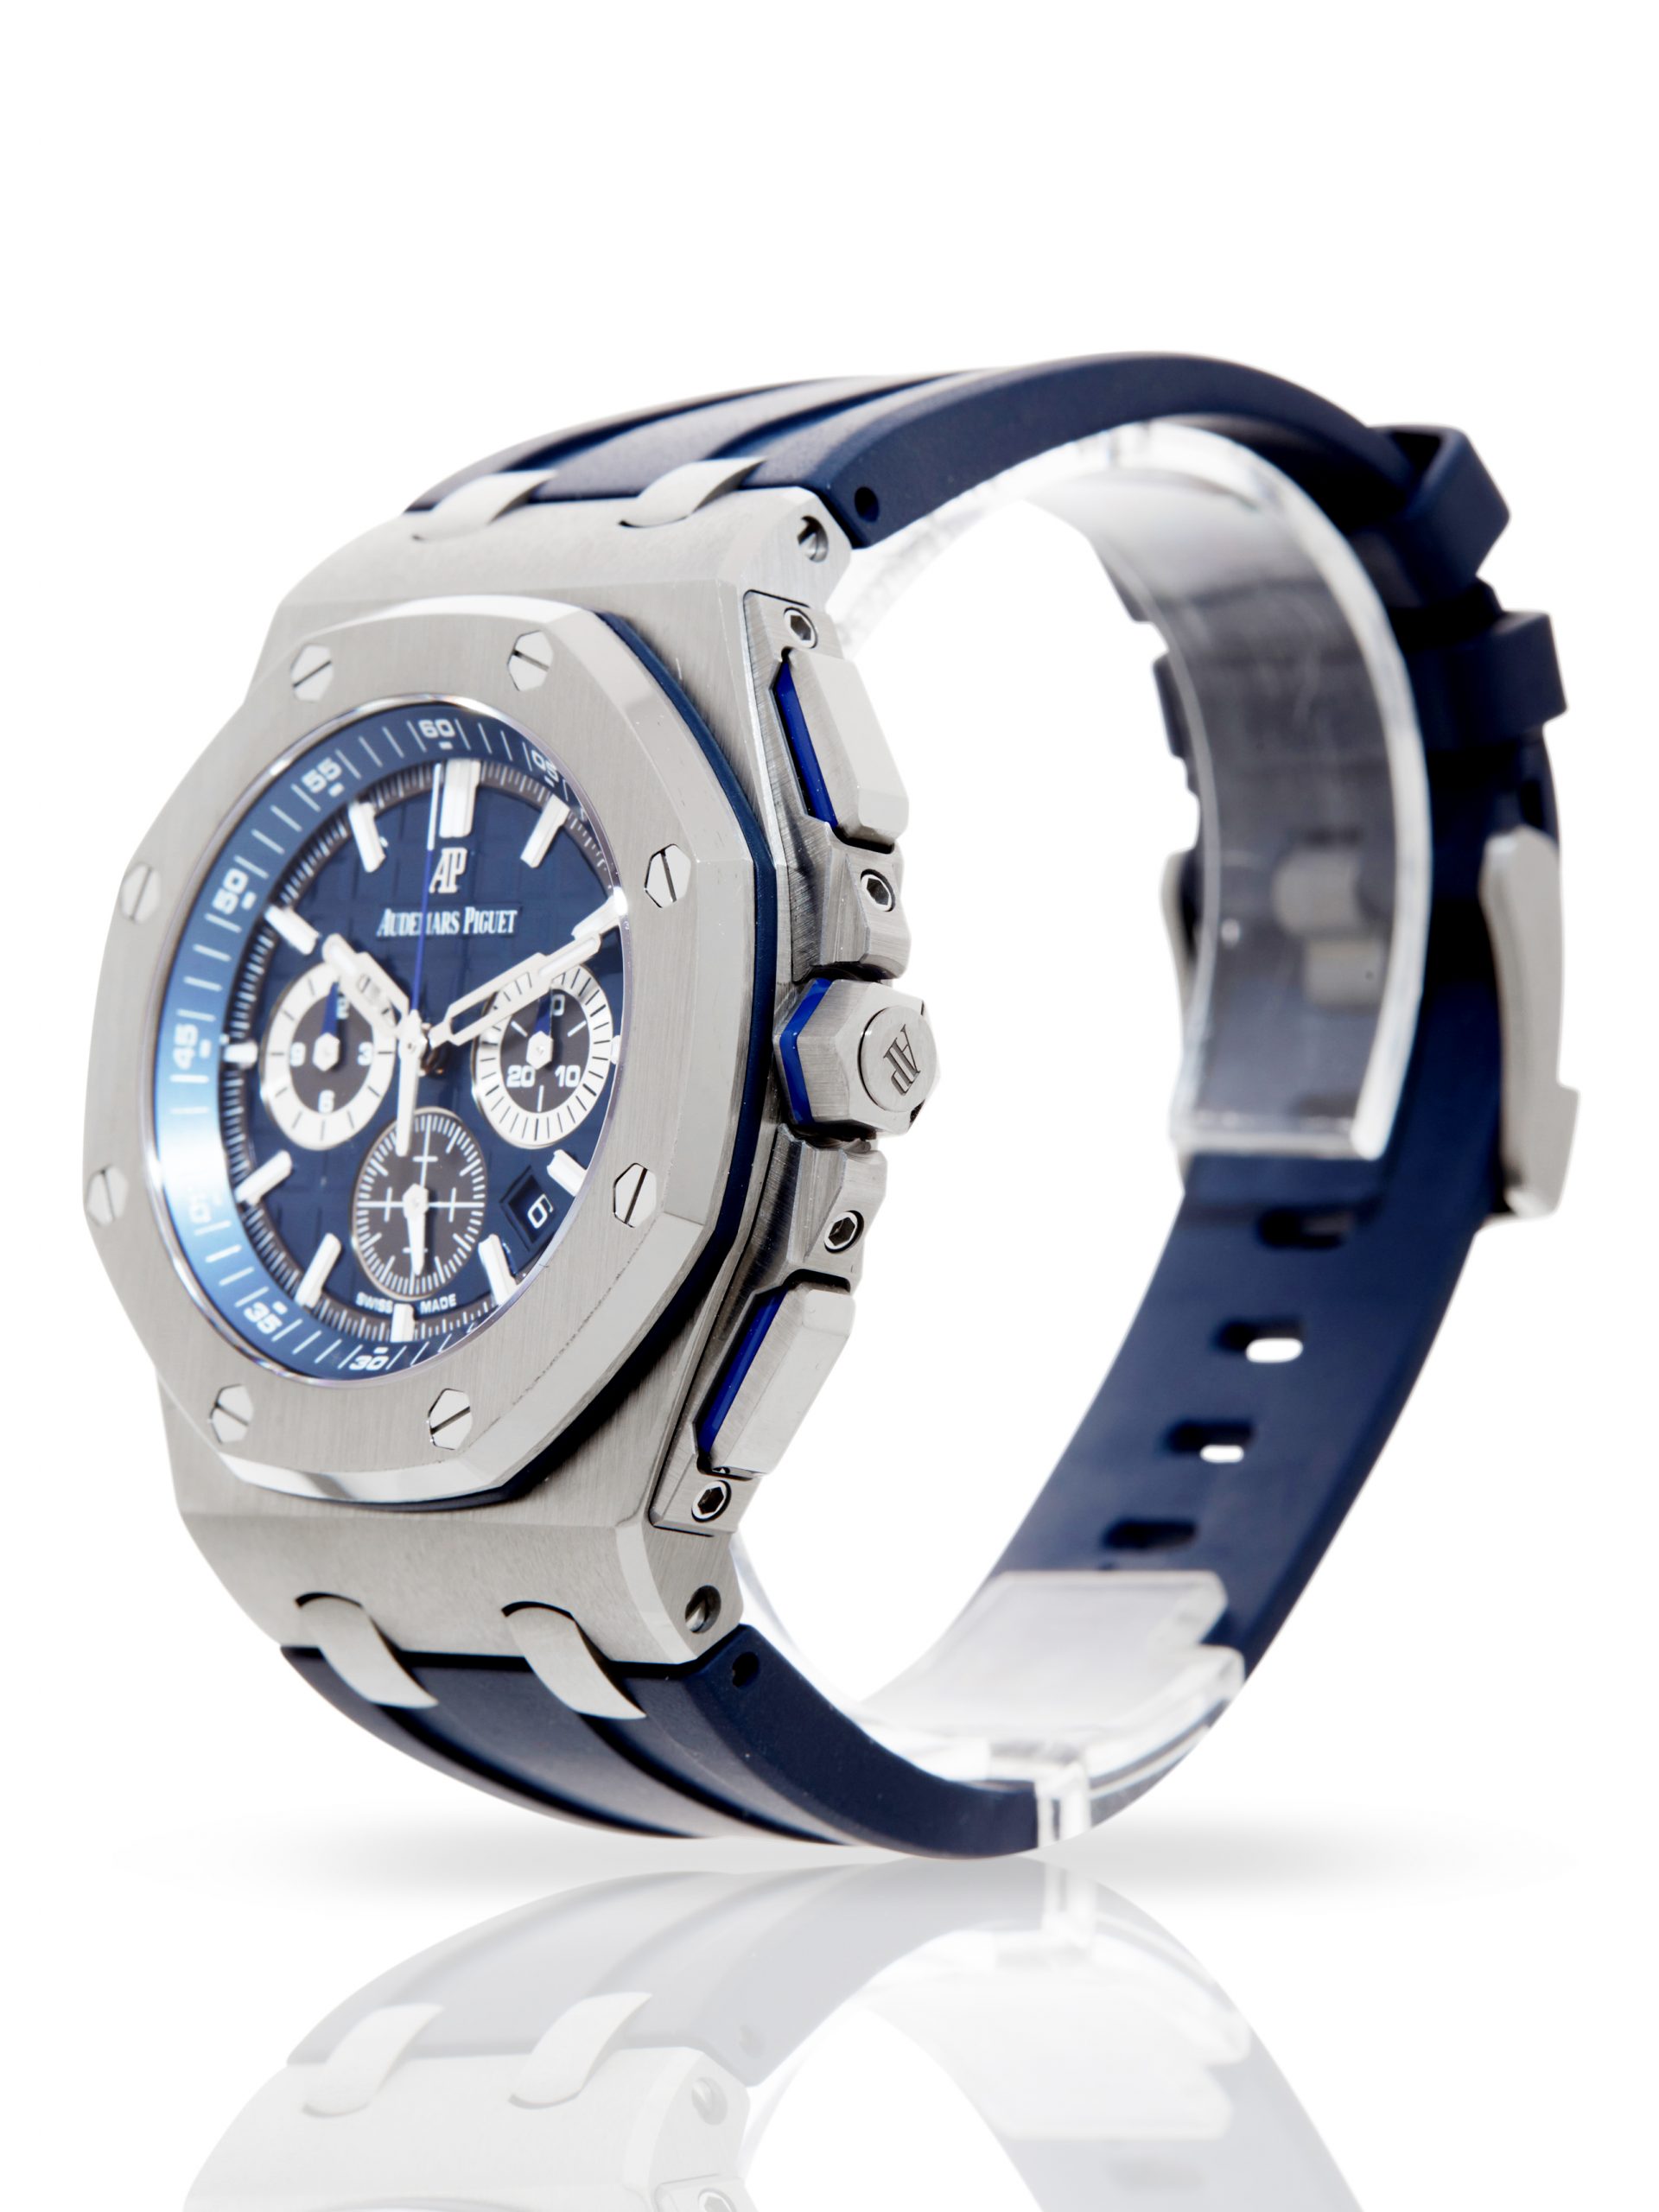 Digital Designs Watches for Men | Mercari